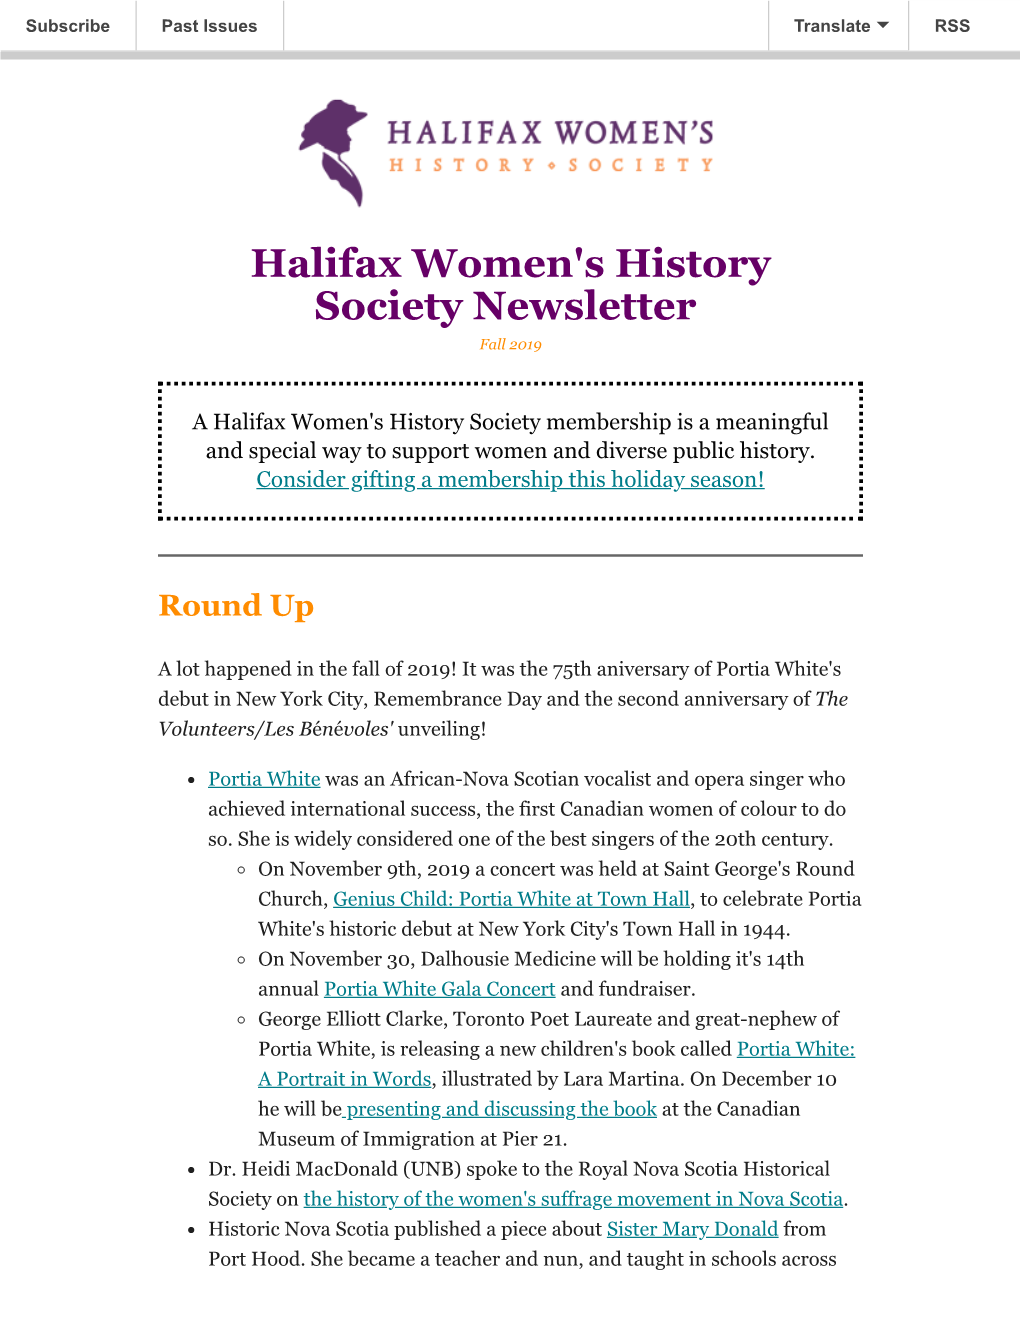 Halifax Women's History Society Newsletter Fall 2019